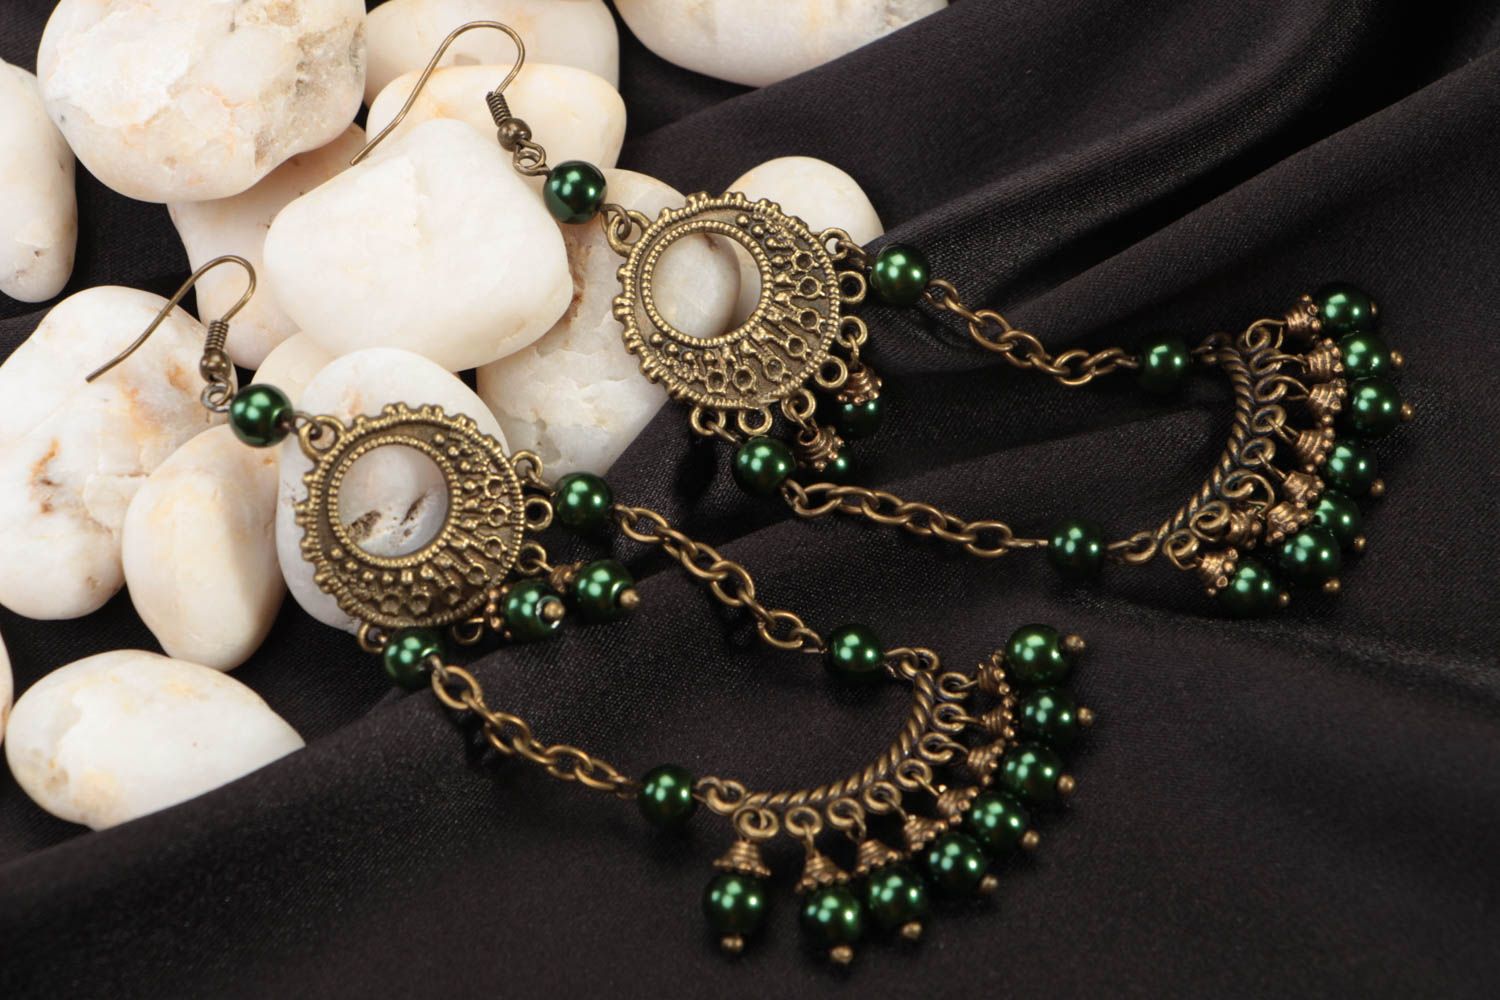 Handmade earrings with charms unusual stylish accessories beautiful jewelry photo 1